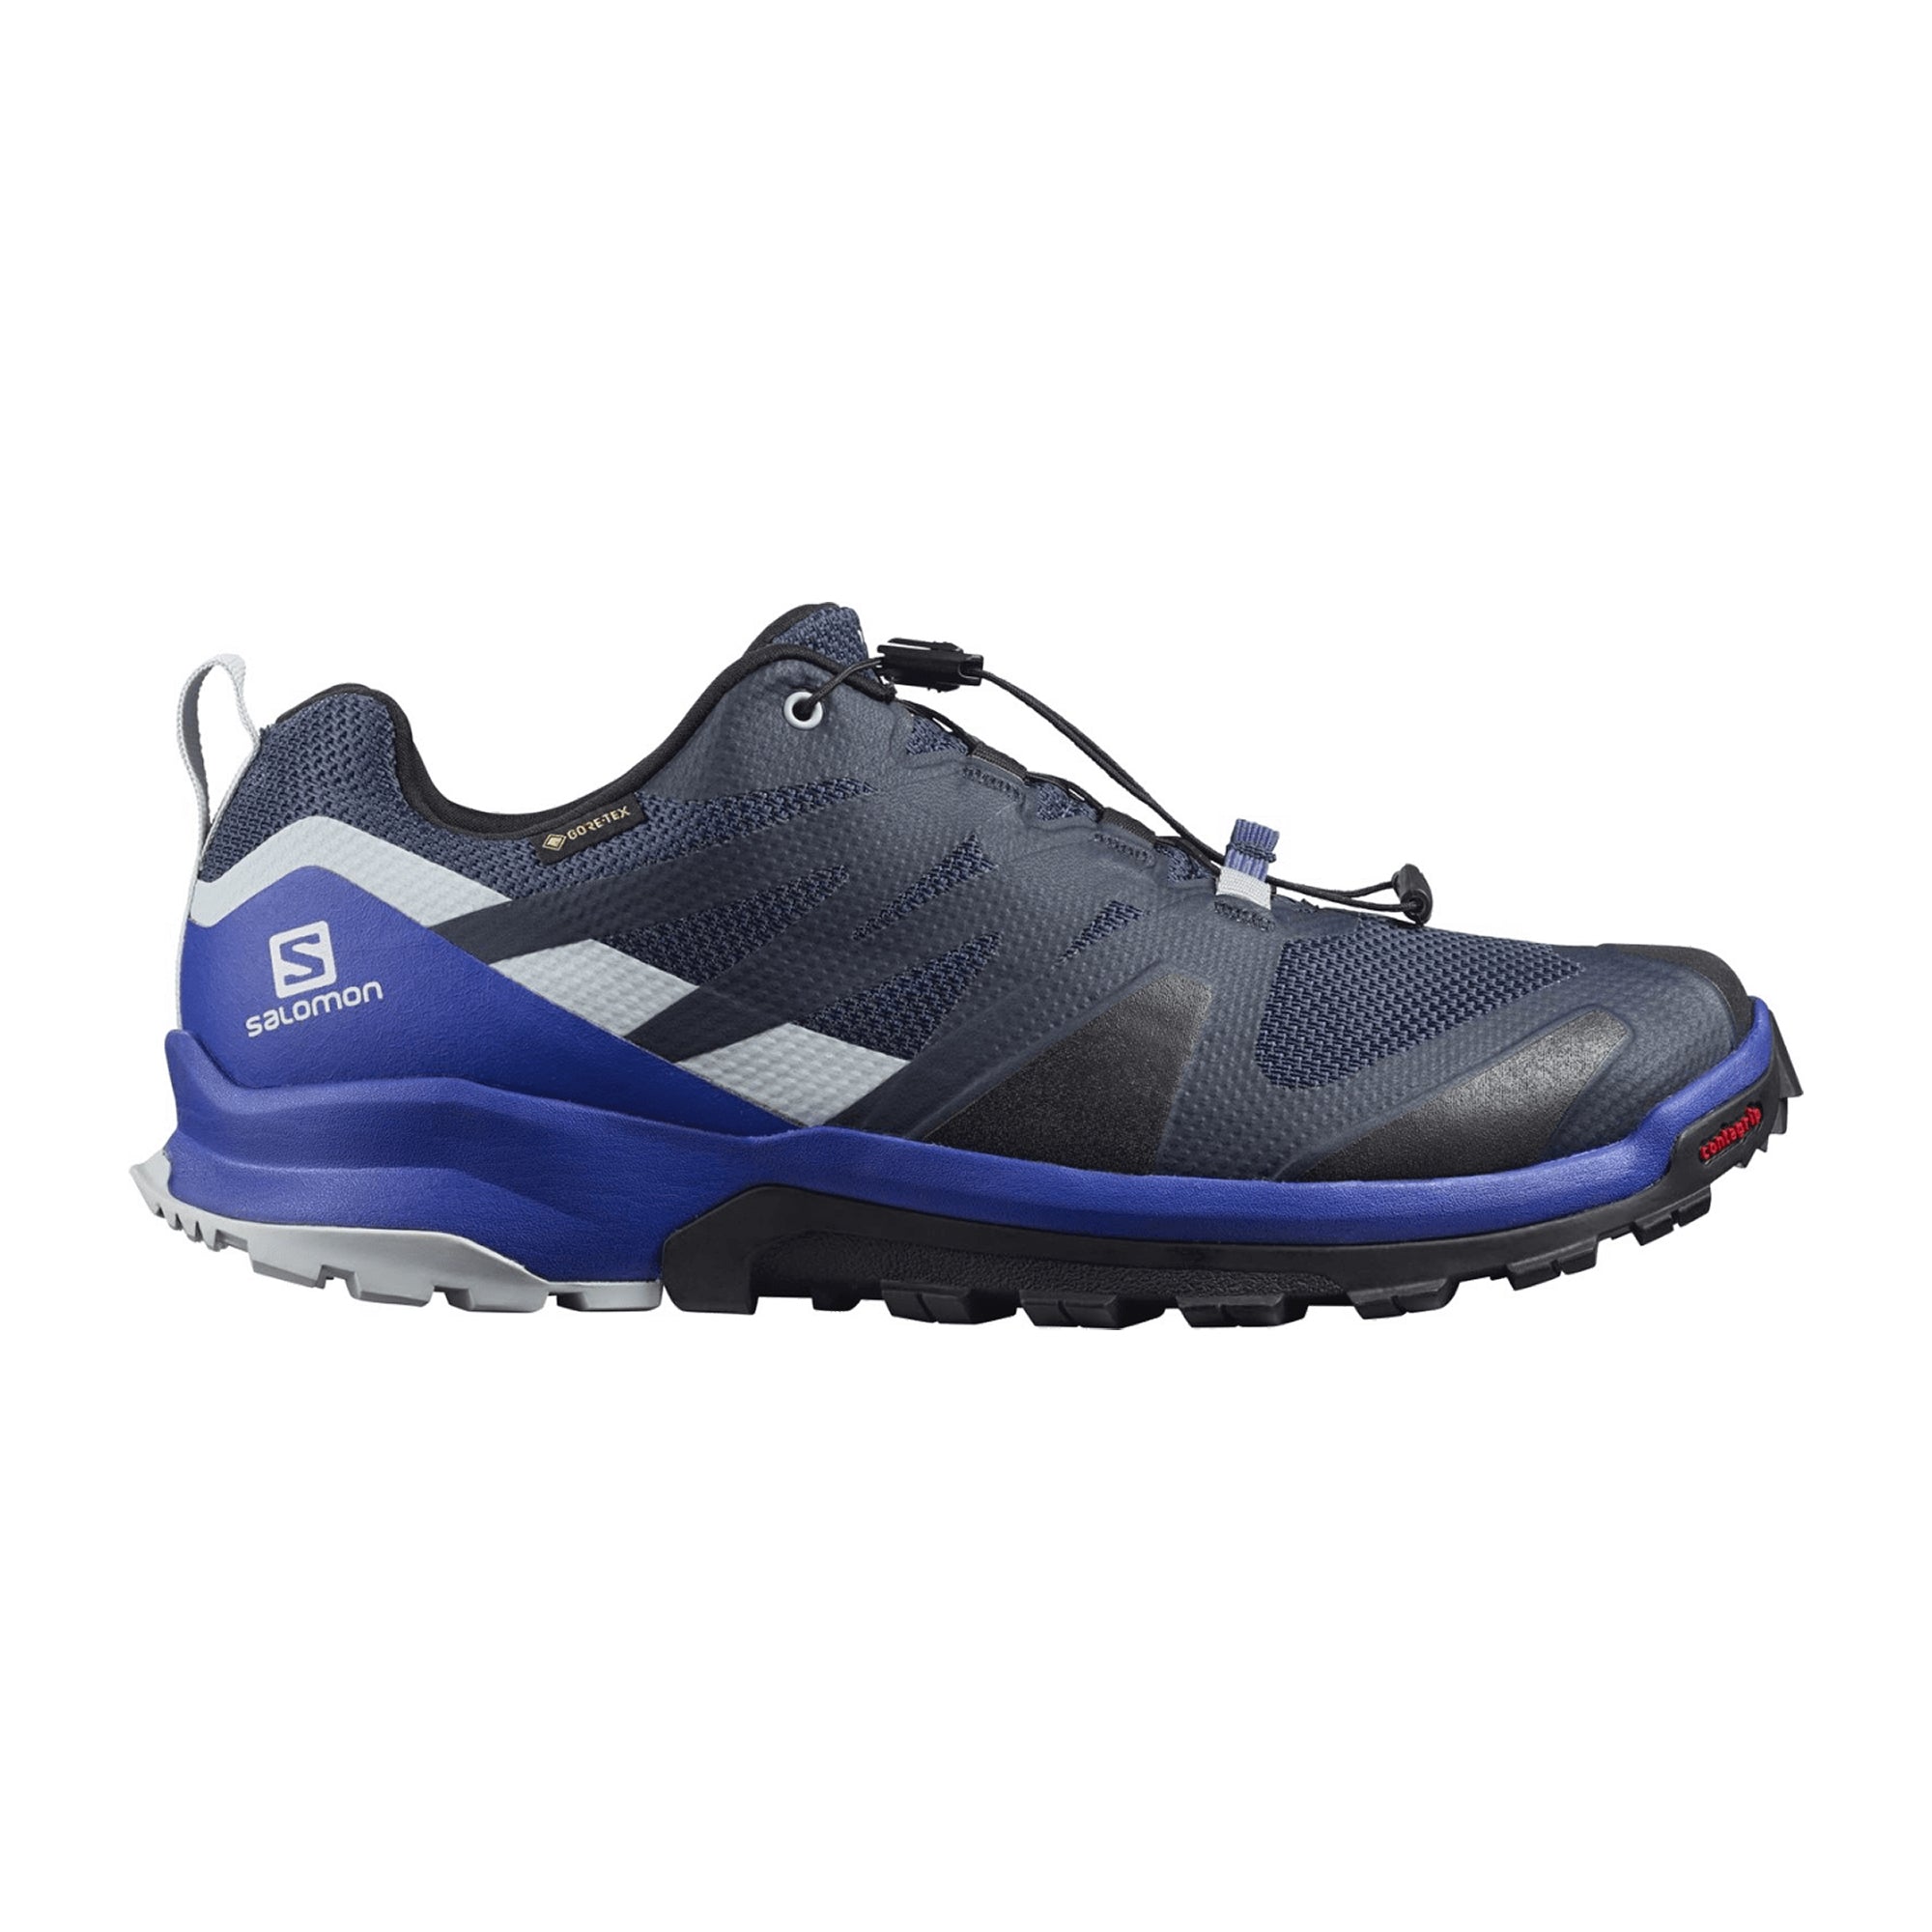 Salomon shoes XA ROGG GTX Dark Denim/ for men, blue